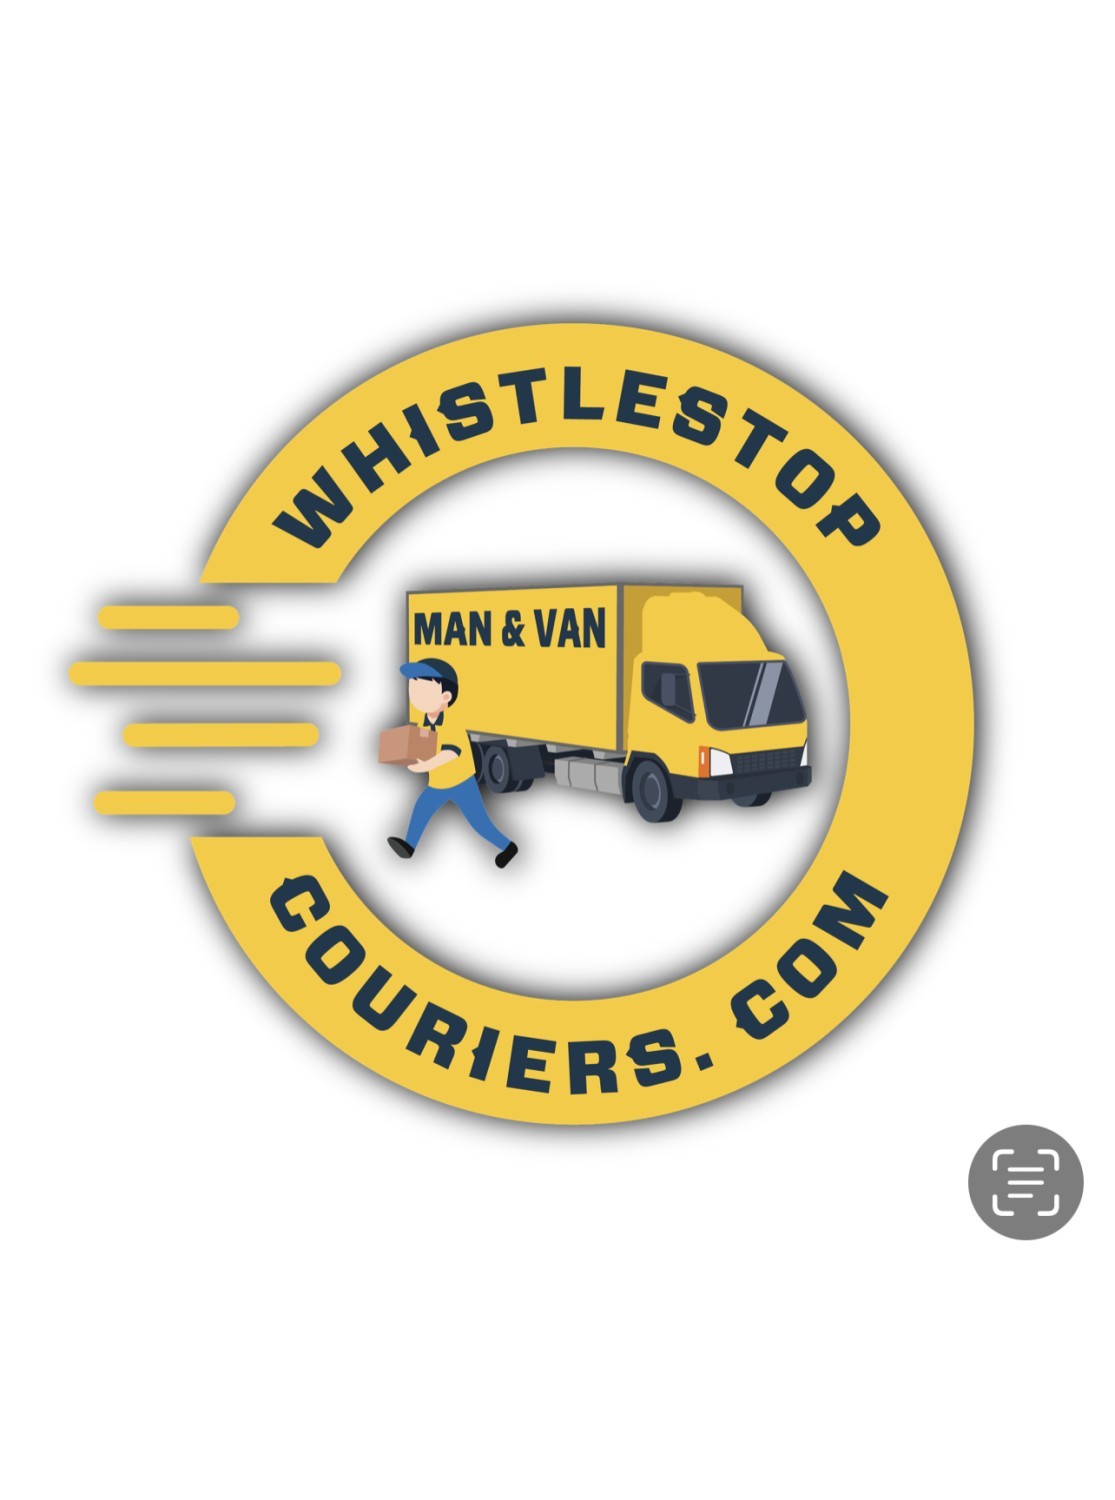 whistlestop-couriers-man-van-london-uk-big-0